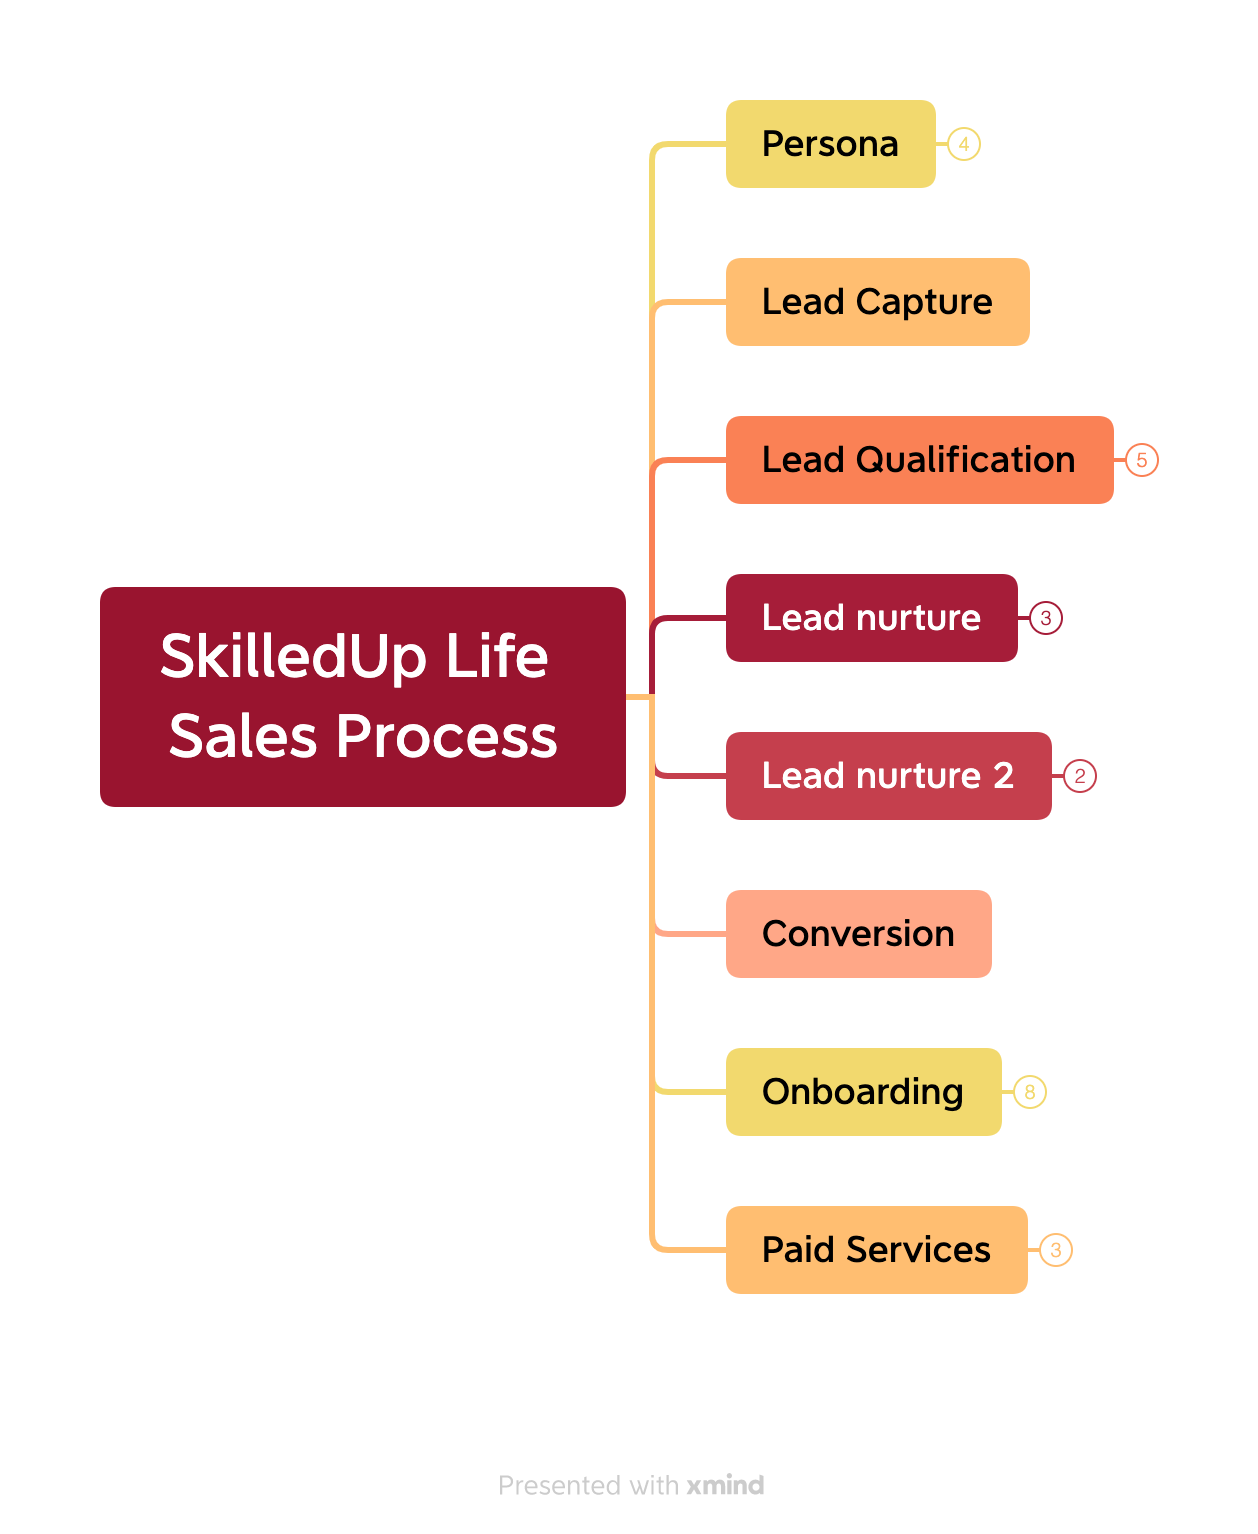 SkilledUp Life Sales Process Simplified